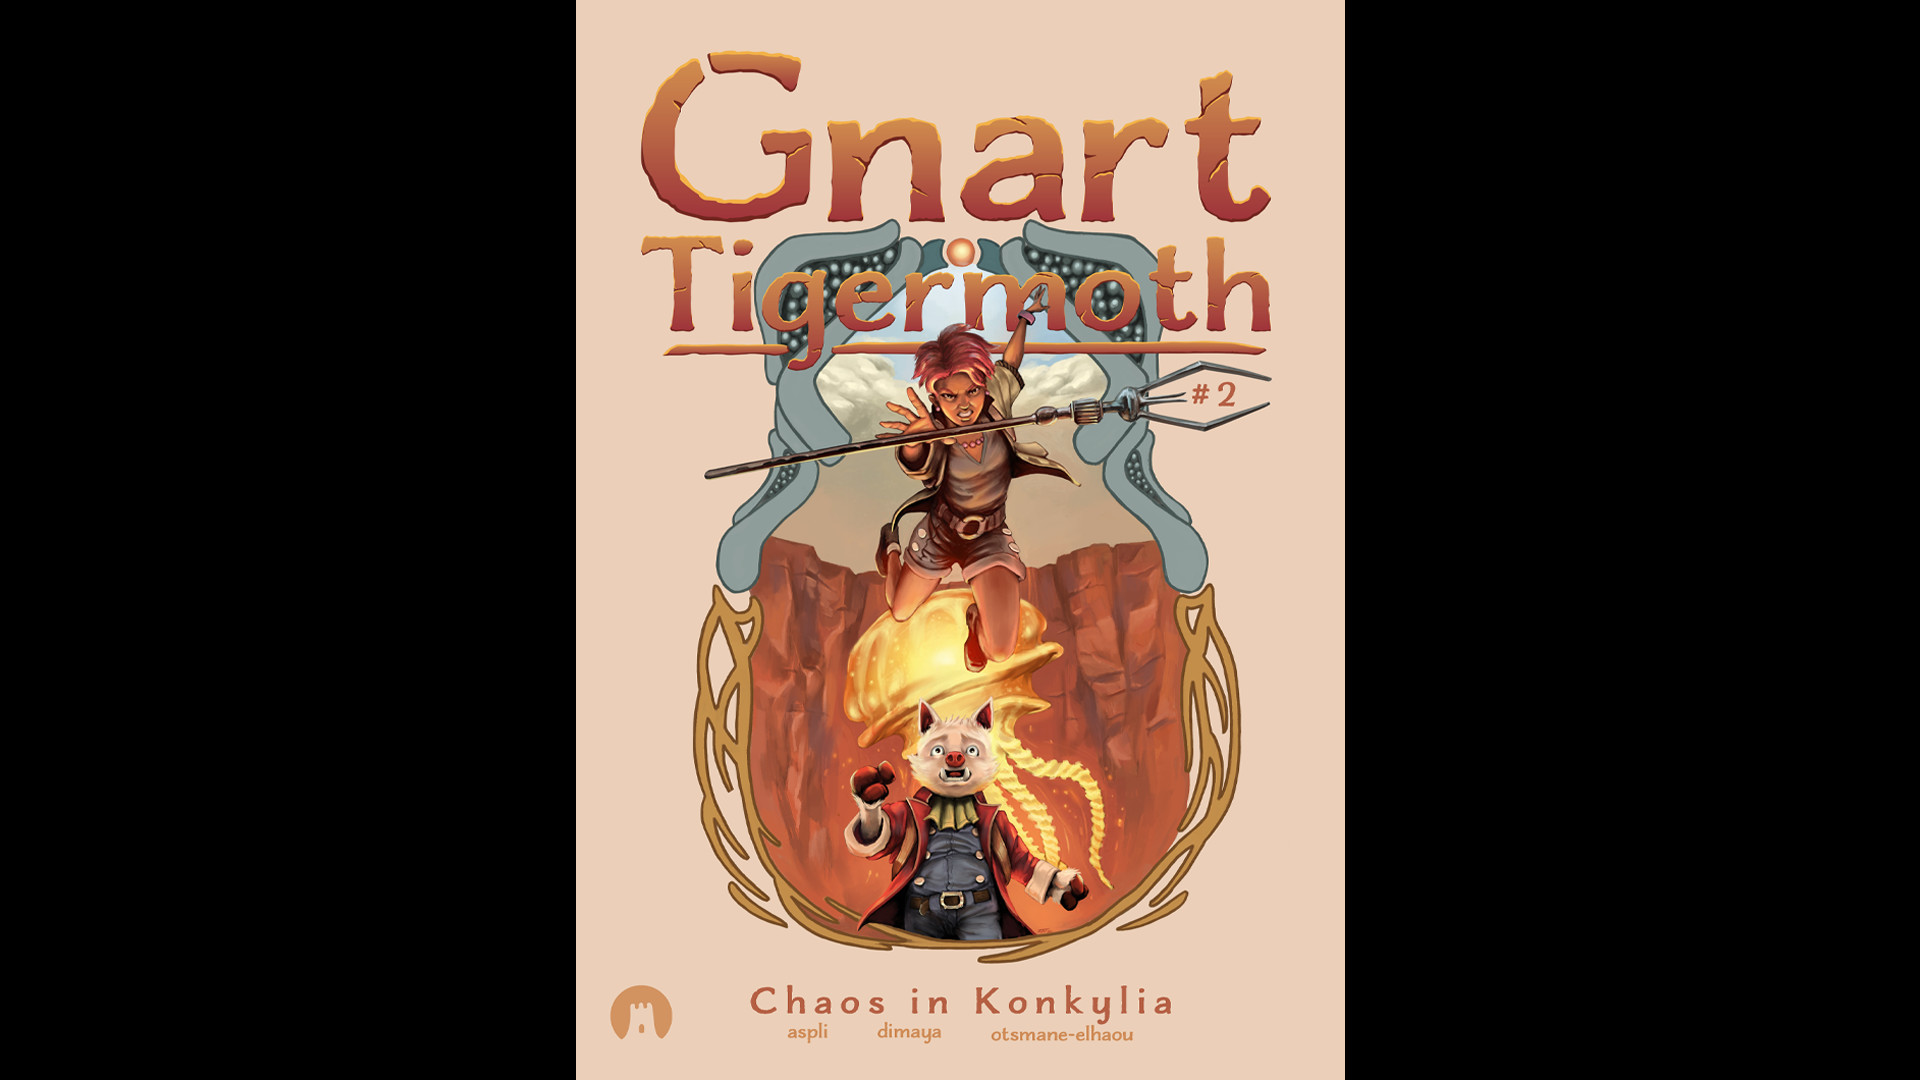 EARTHLOCK Comic Book #3: Gnart Tigermoth: Chaos in Konkylia Featured Screenshot #1